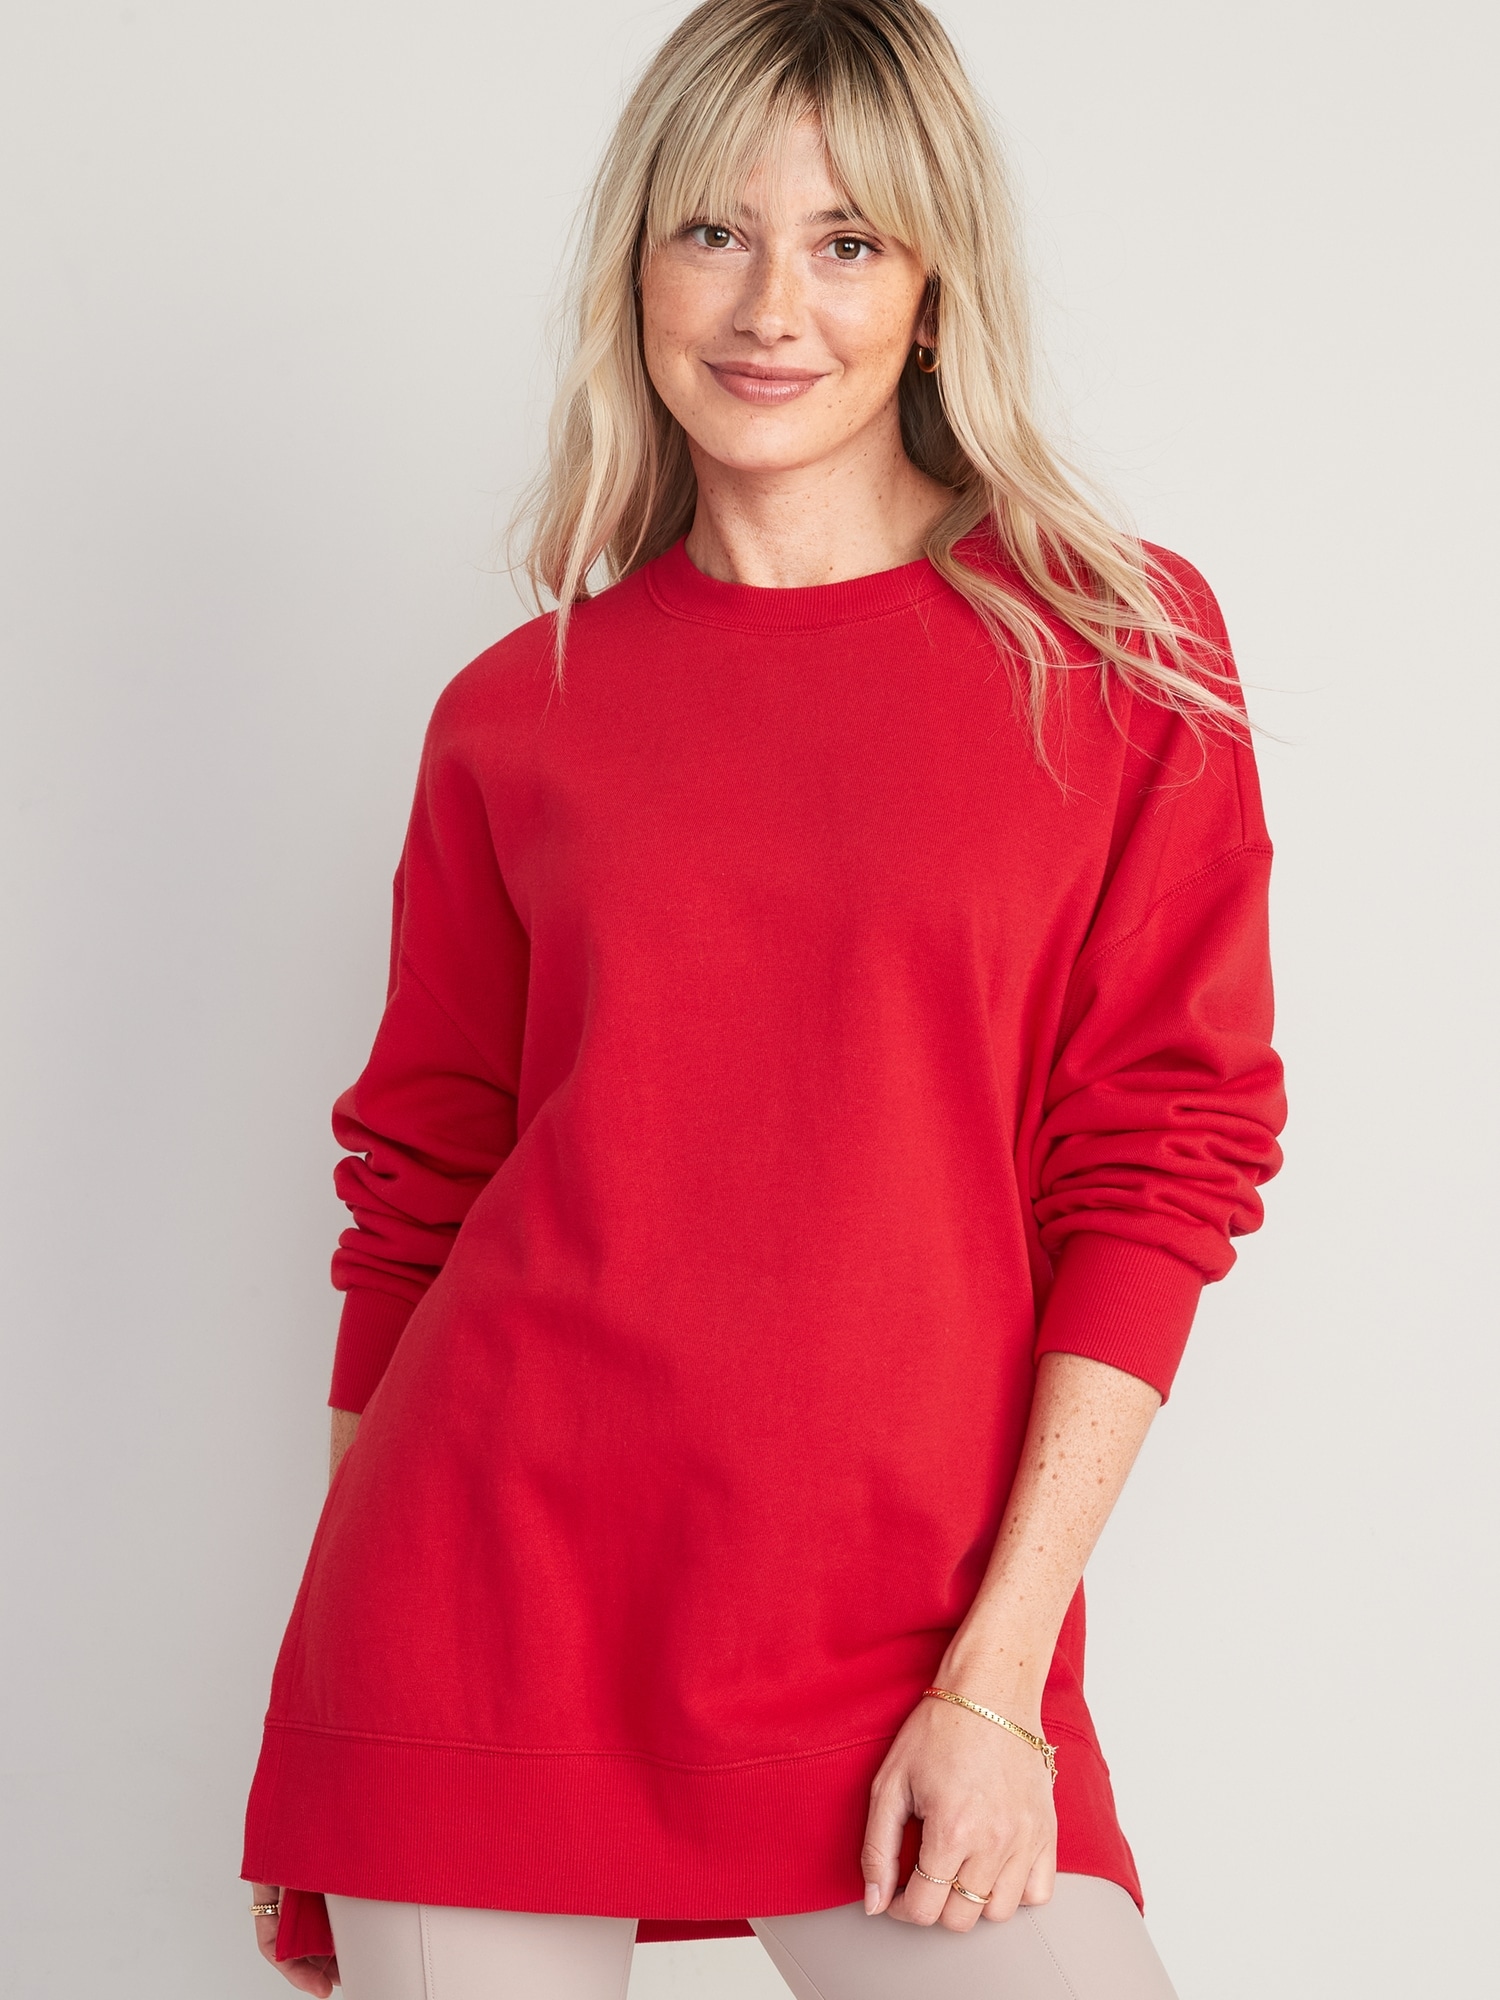 Old Navy Oversized Boyfriend Garment-Dyed Tunic Sweatshirt for Women red. 1